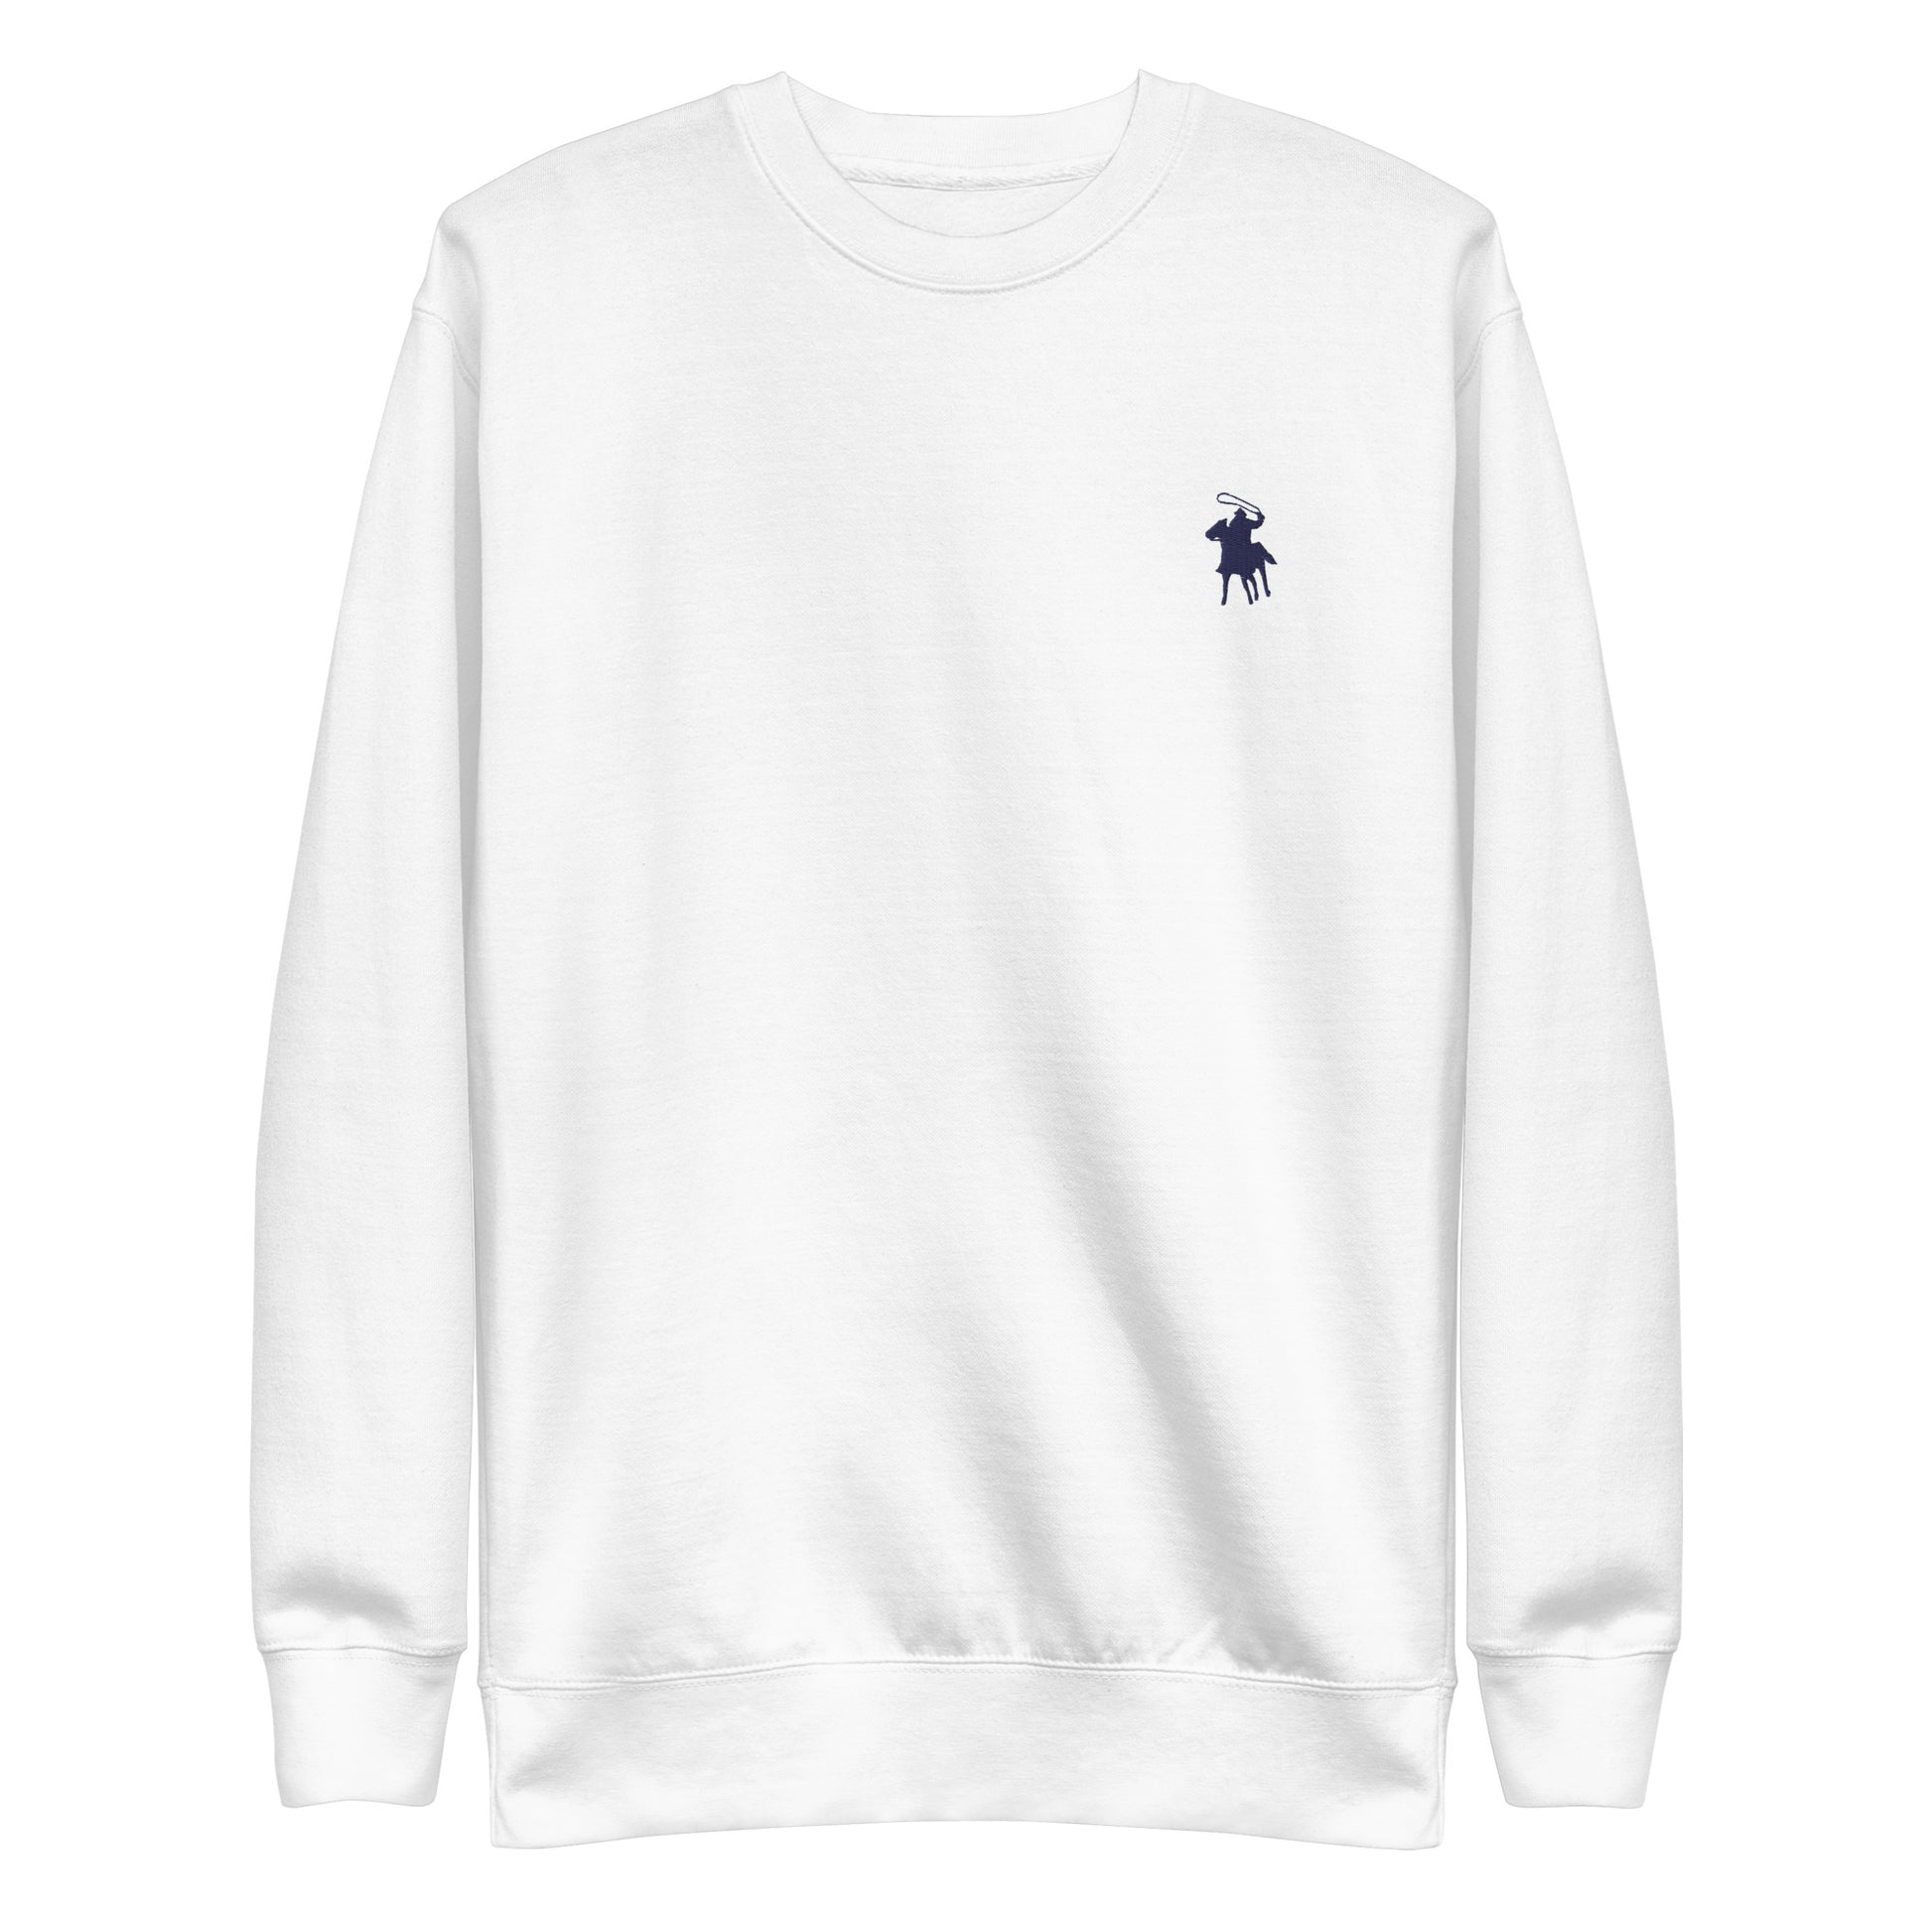 Country Polo Sweatshirt (White)